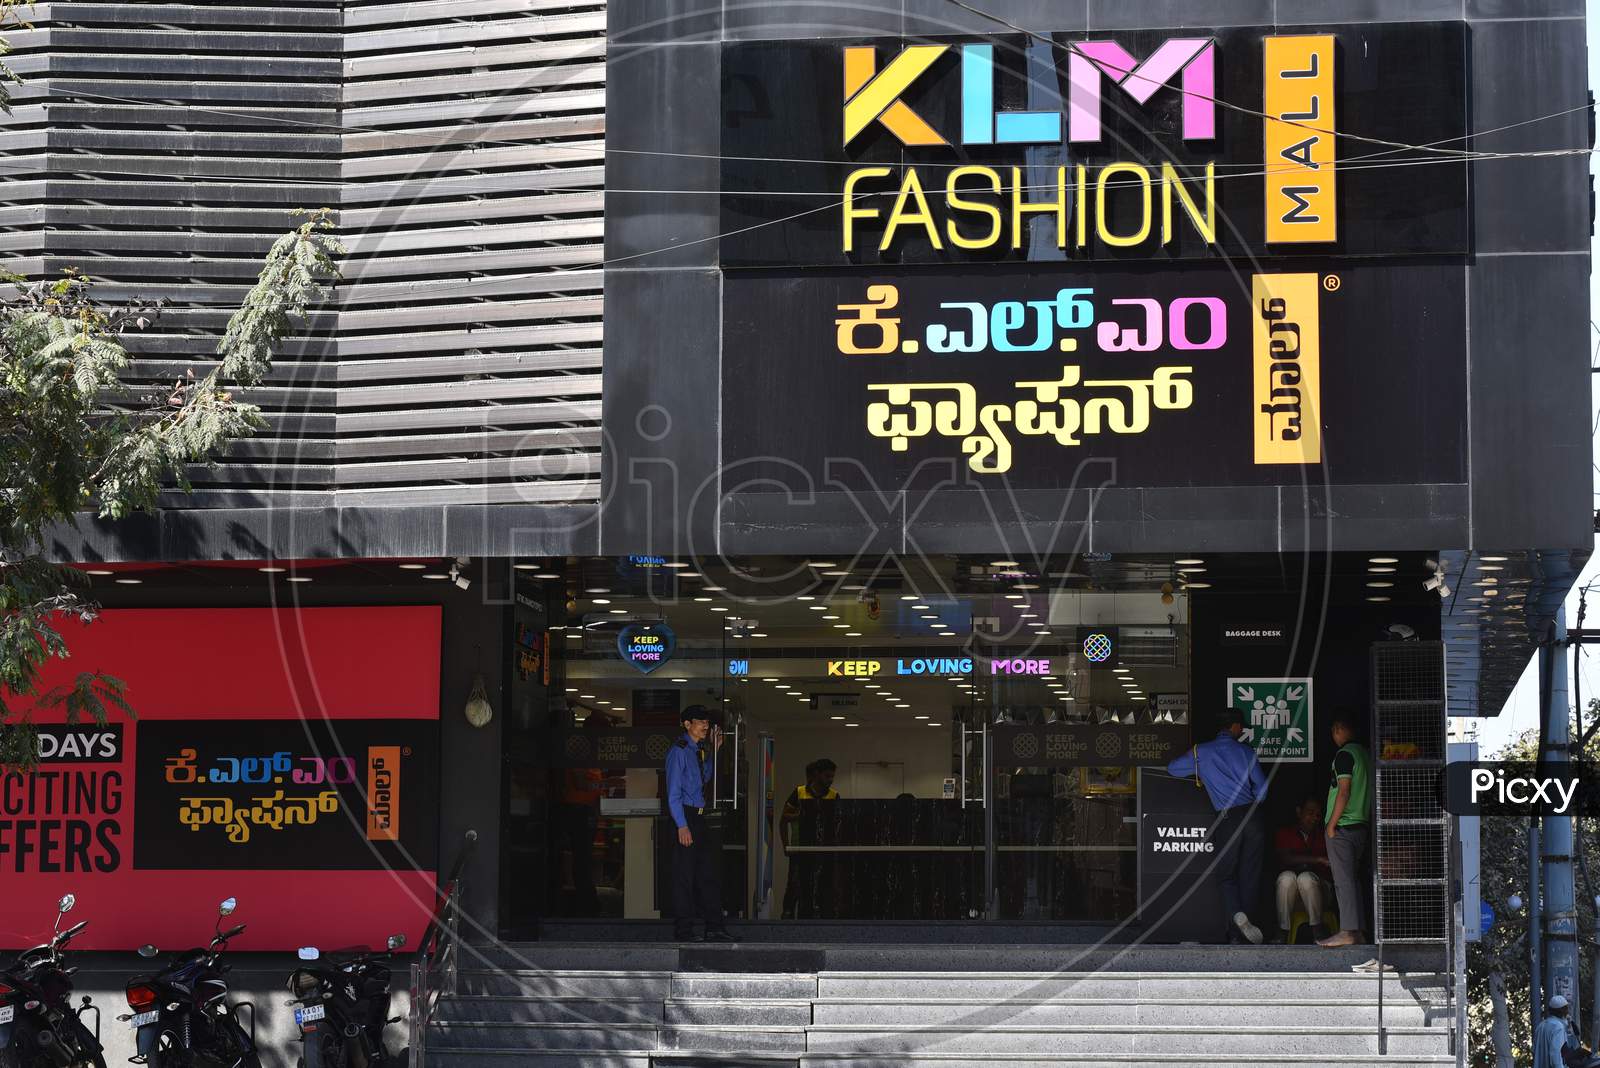 KLM Fashion Mall, HSR Layout